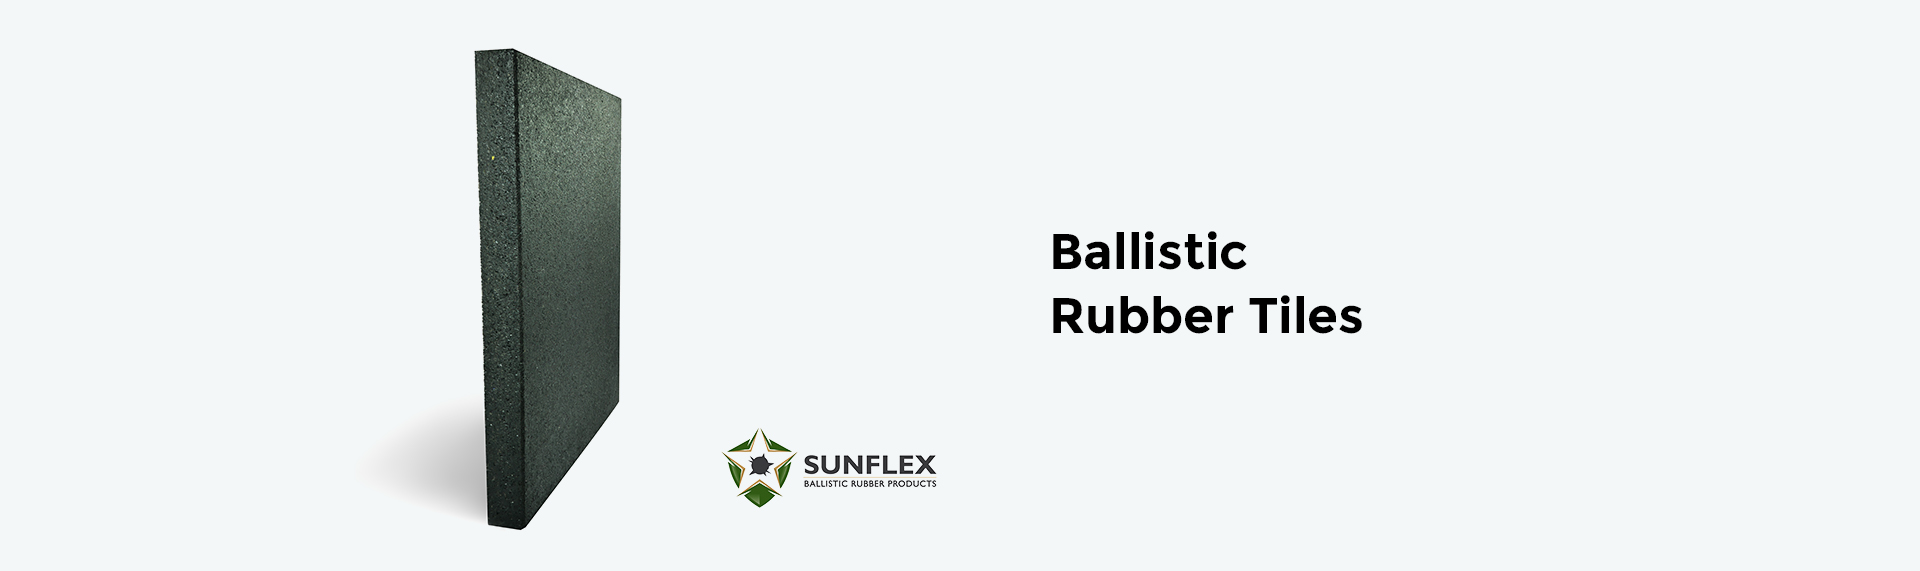 1-Ballistic-Rubber-Tiles